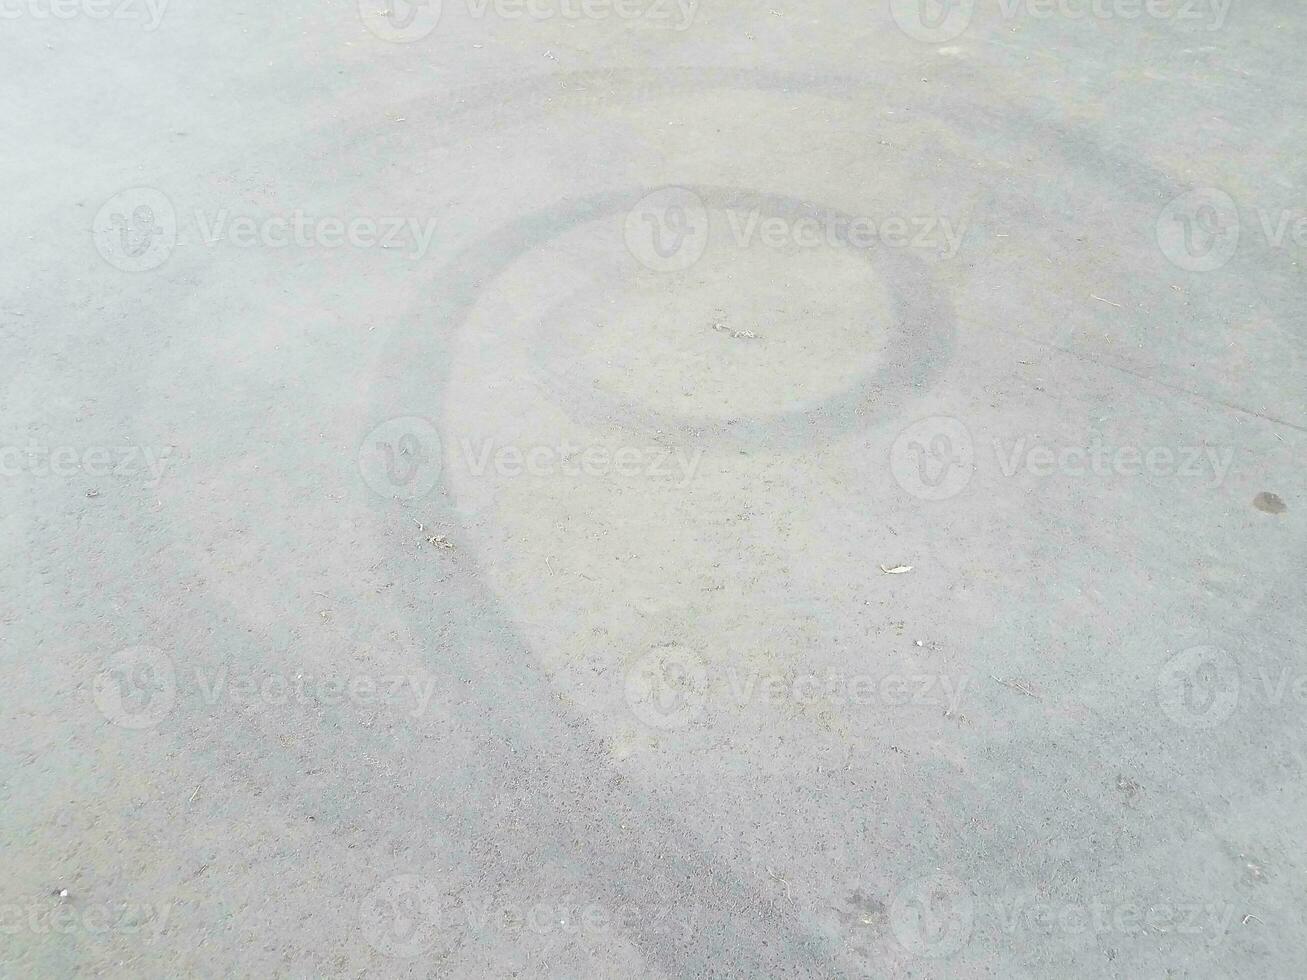 black spiral skidmark on black asphalt or pavement photo